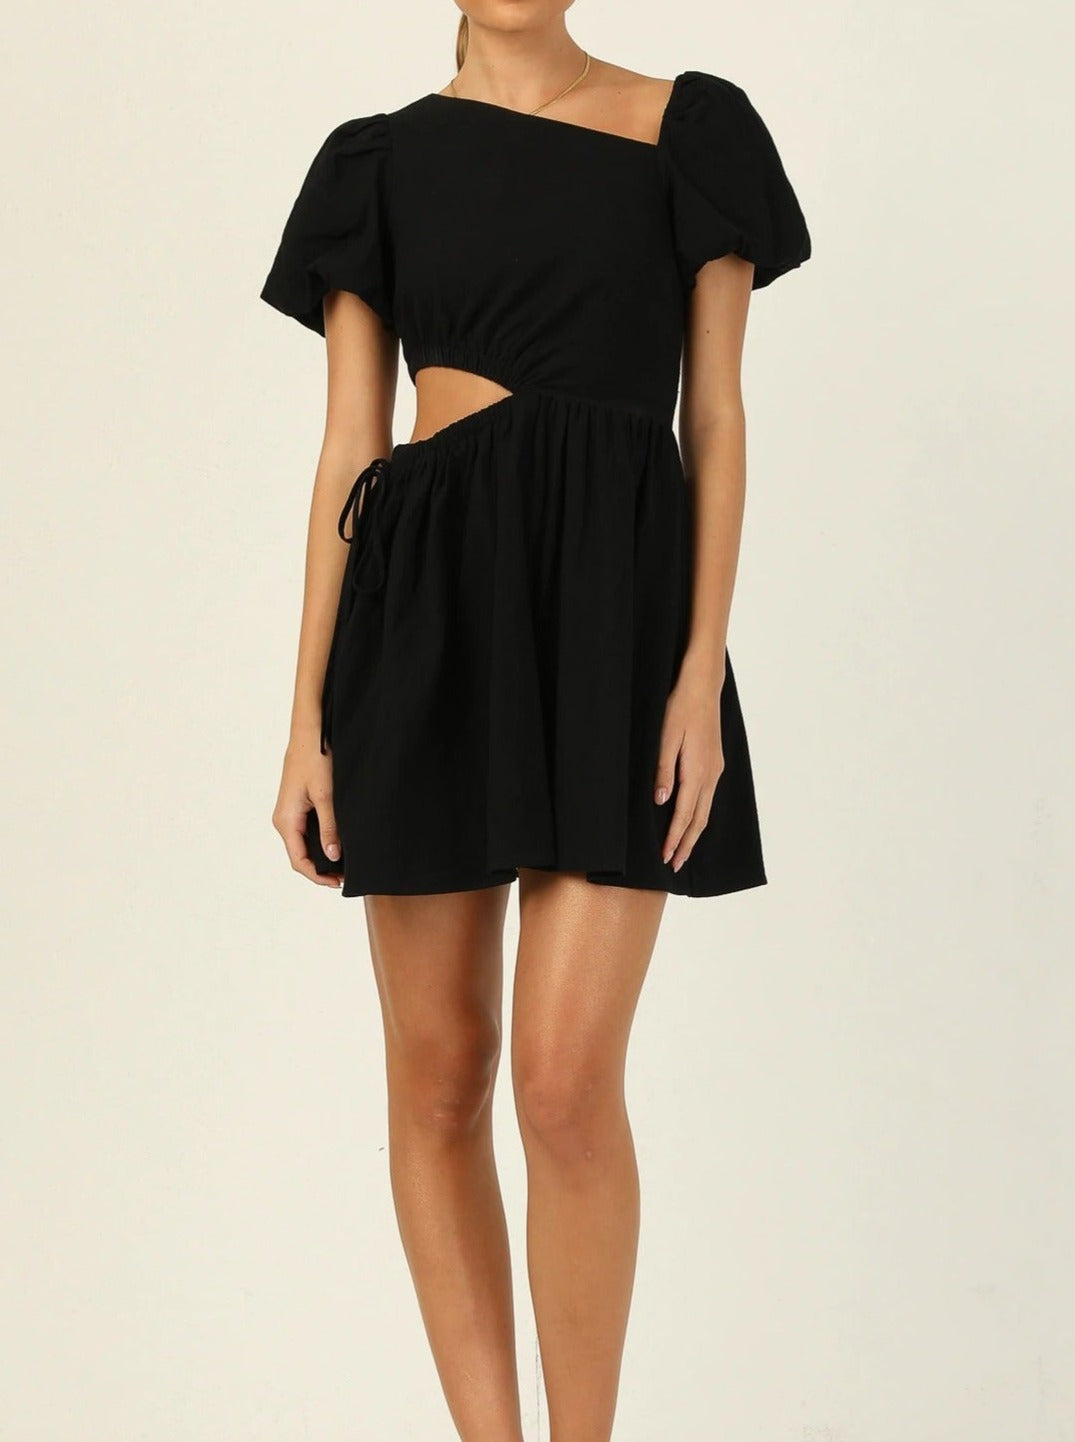 NTG Fad Dress black / S Round neck short sleeves open waist simple dress